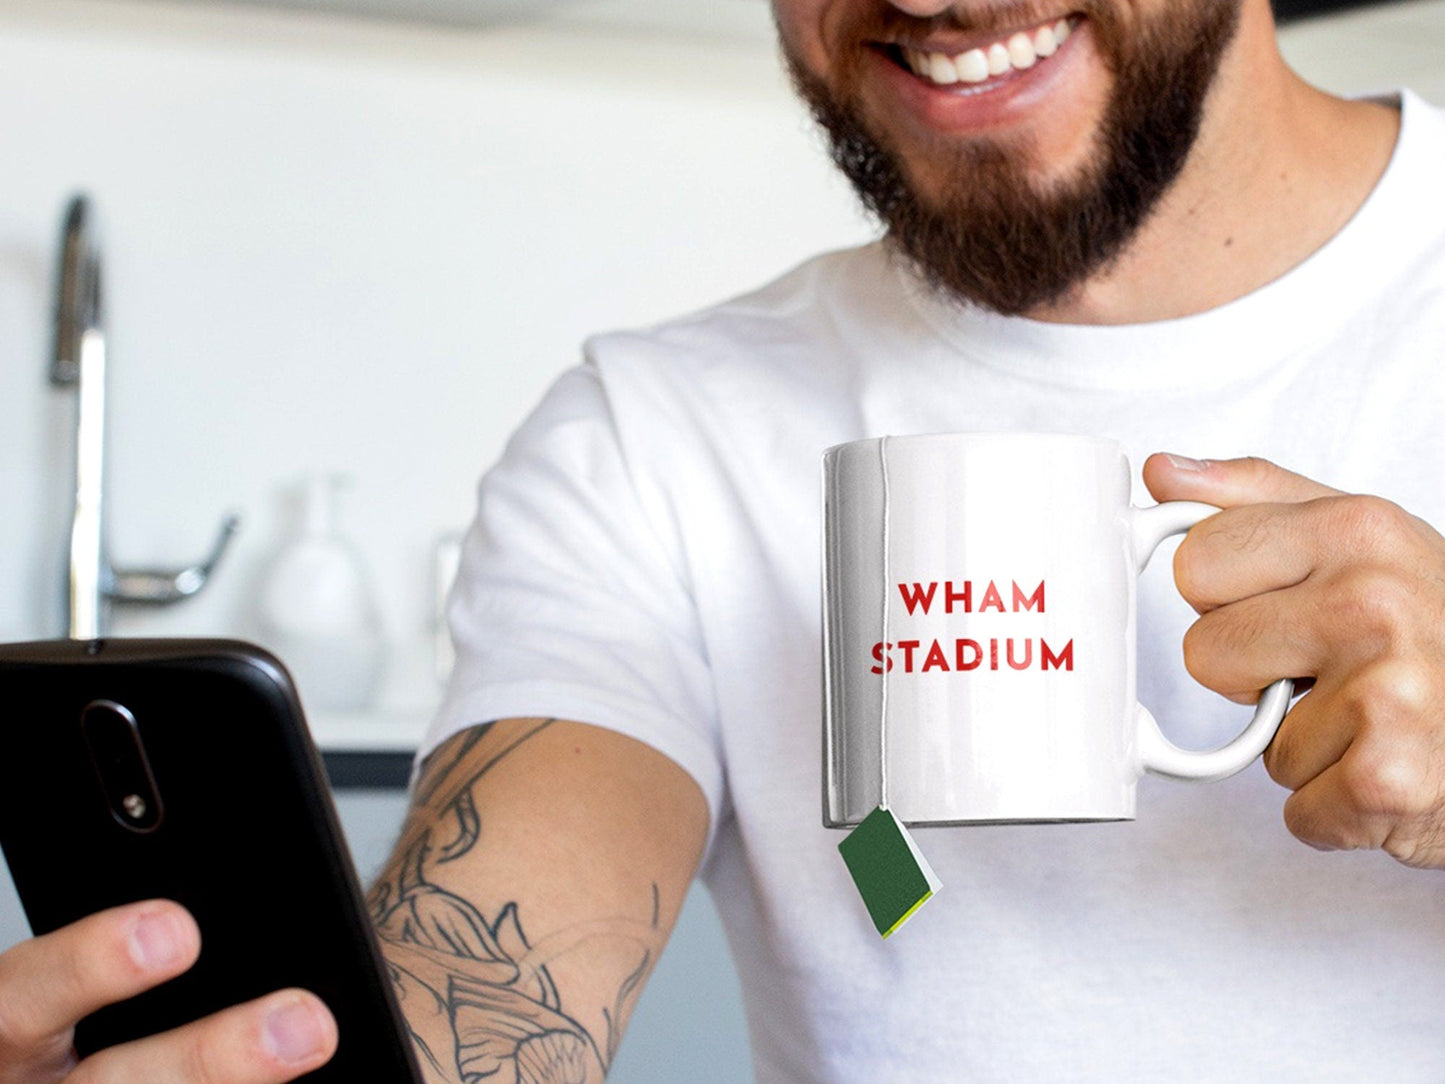 Accrington Stanley Illustrated Football Stadium Coffee Mug, Football Fan Gifts - Turf Football Art